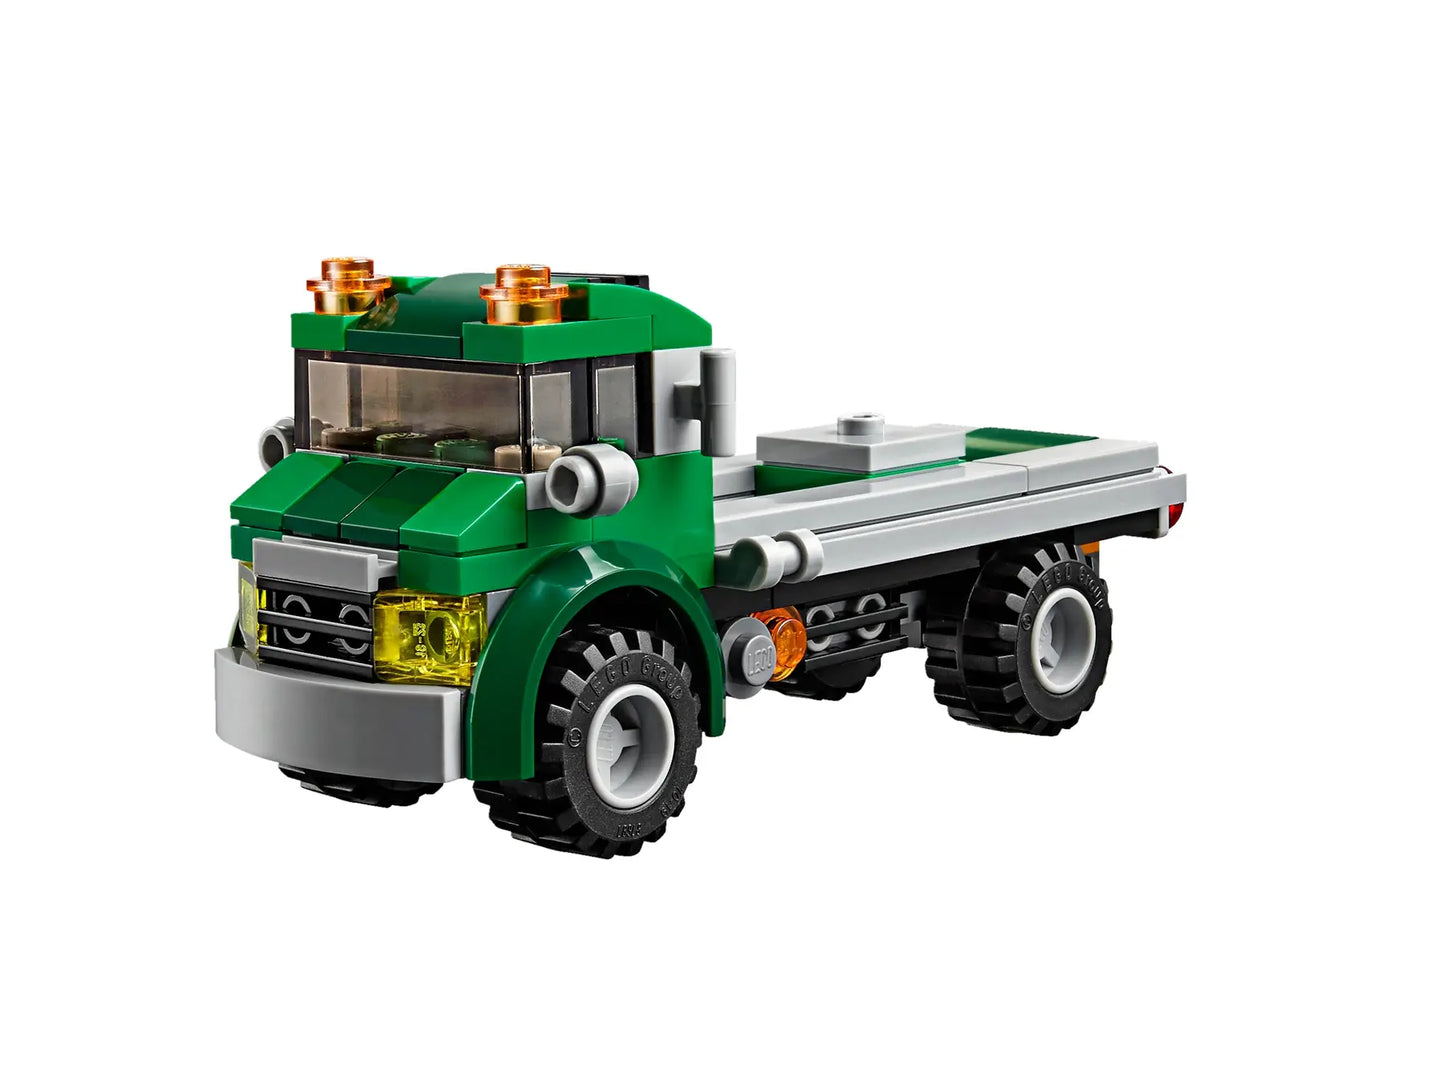 Lego Creator 3in1 Chopper Transporter 31042